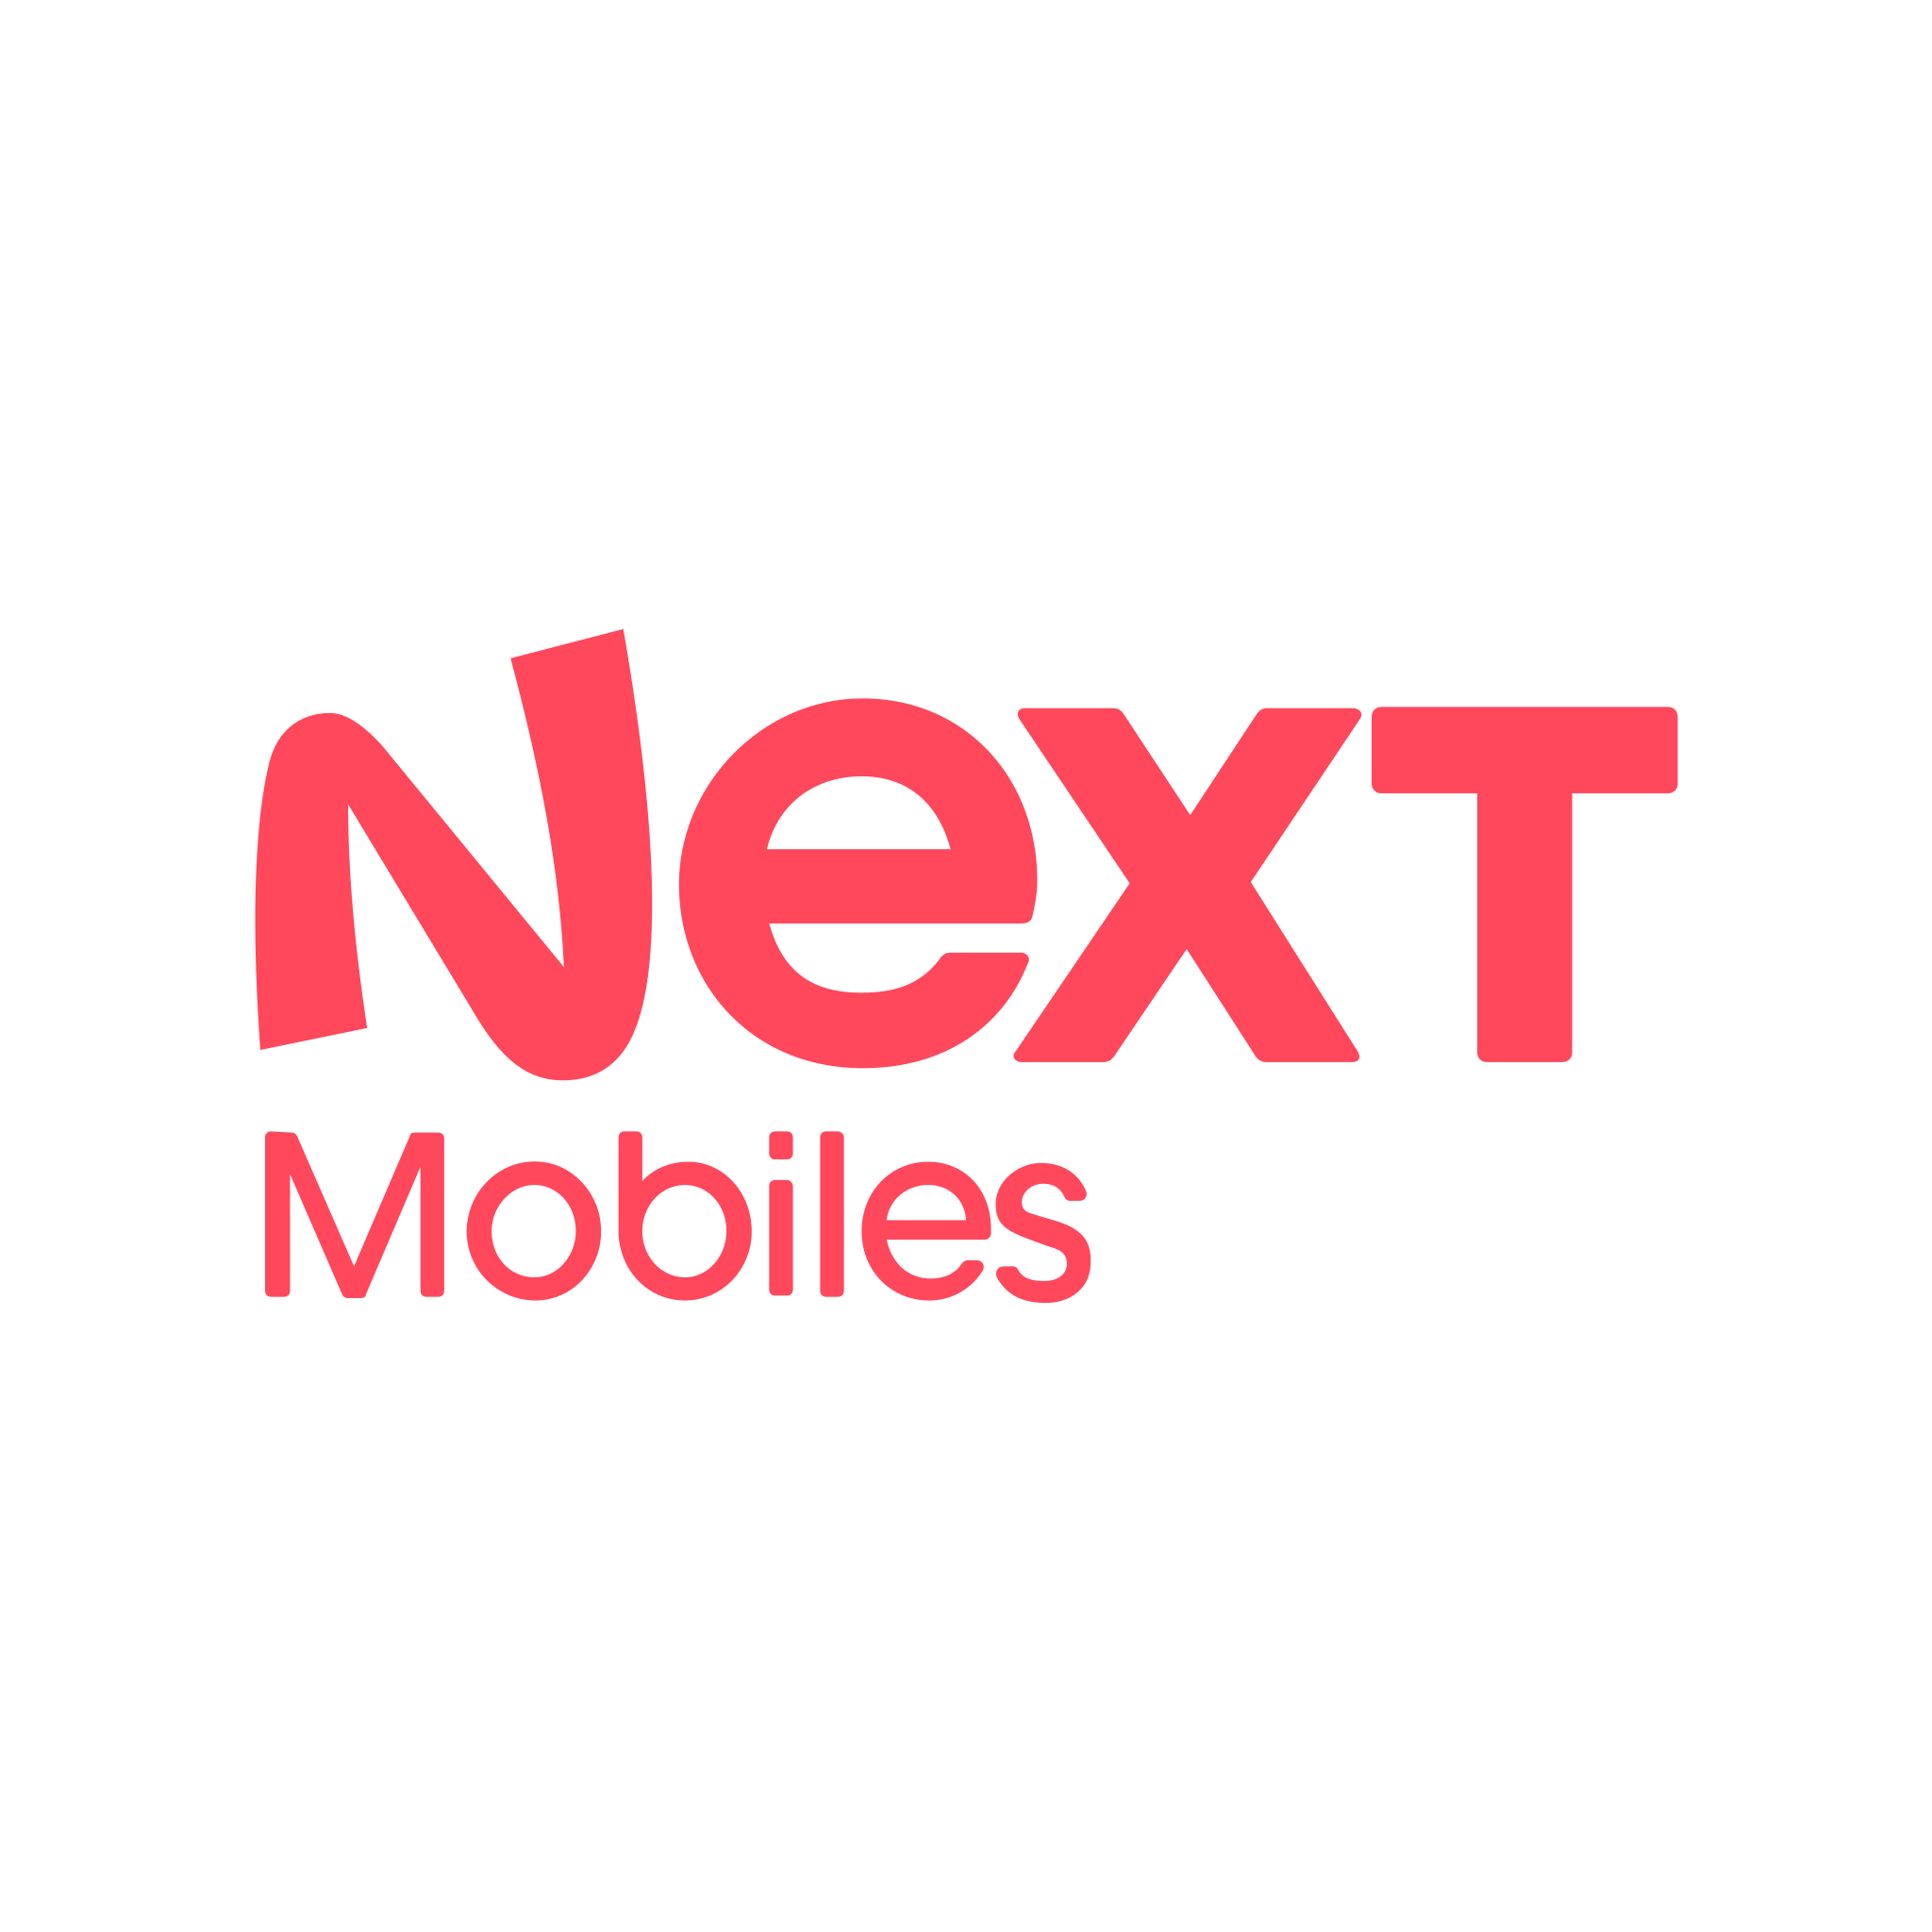 Next Mobiles